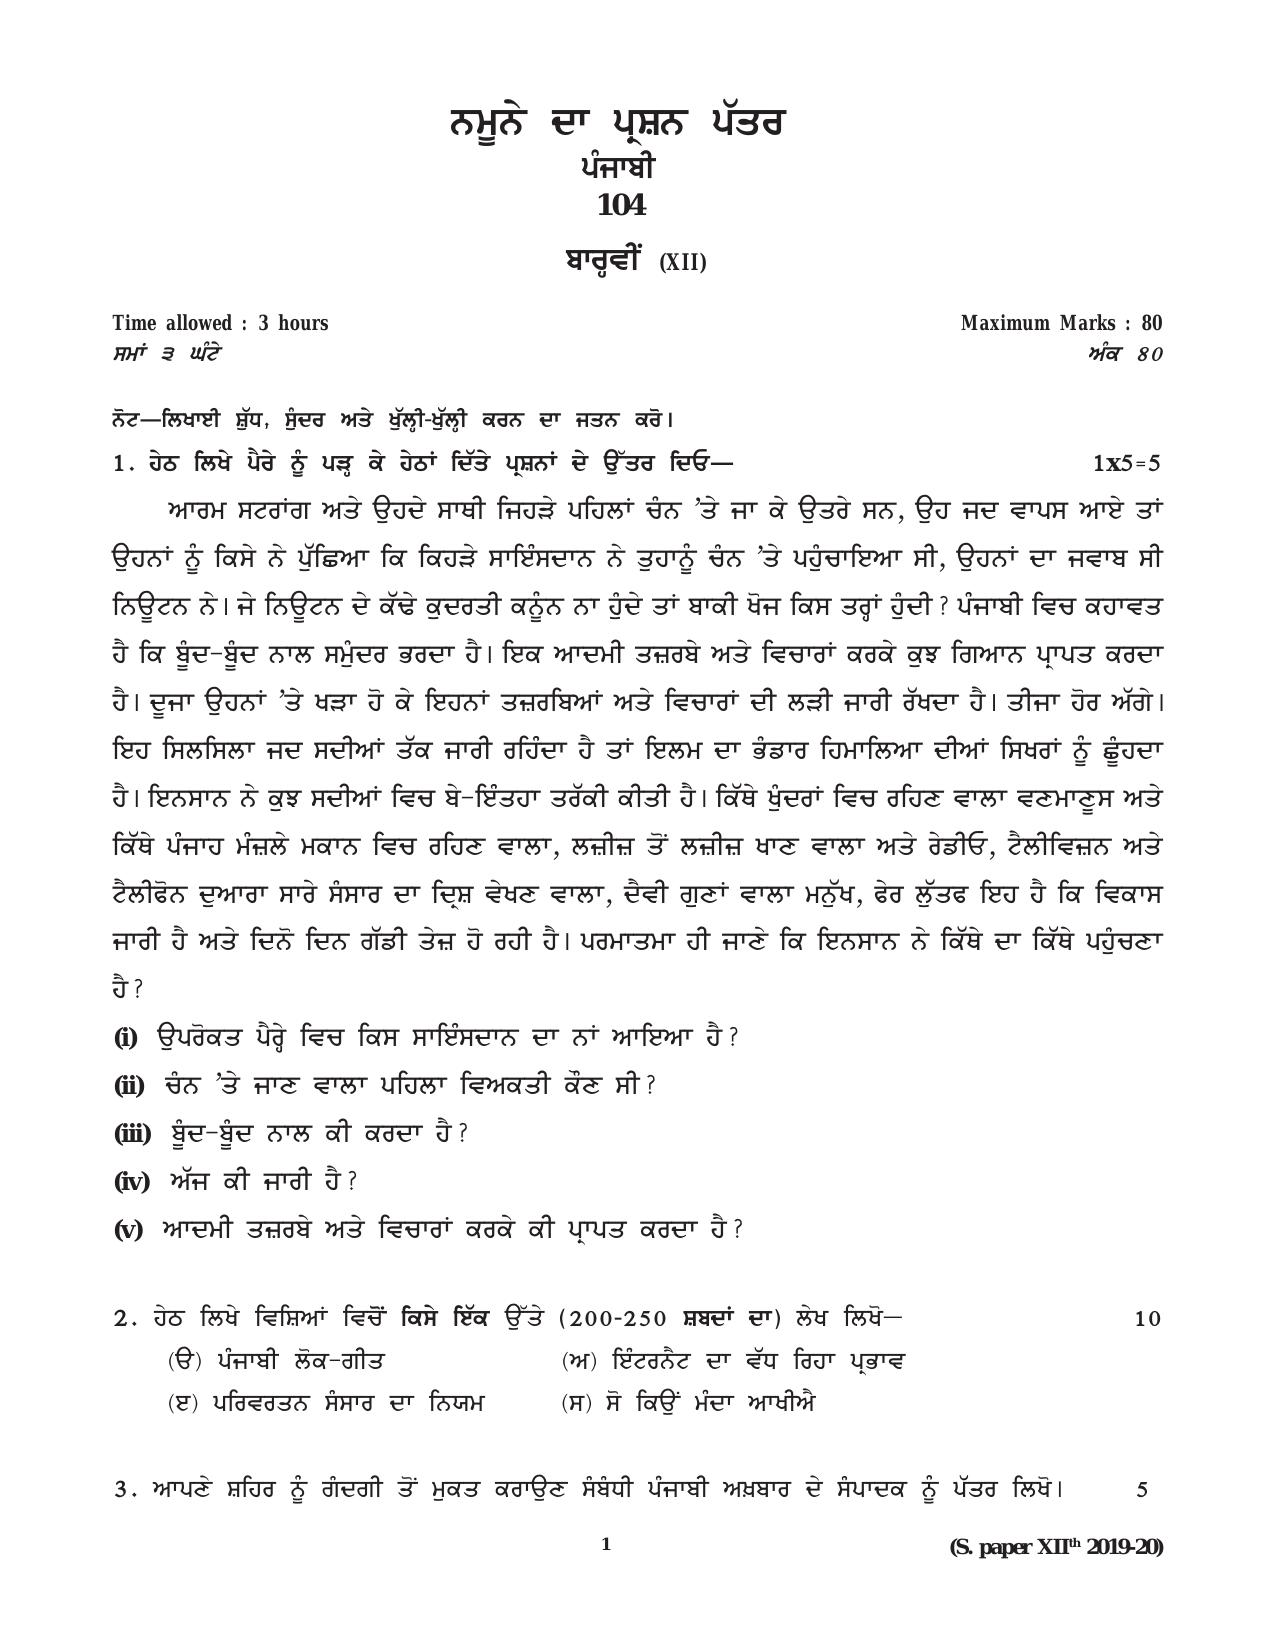 CBSE Class 12 Punjabi -Sample Paper 2019-20 - Page 1